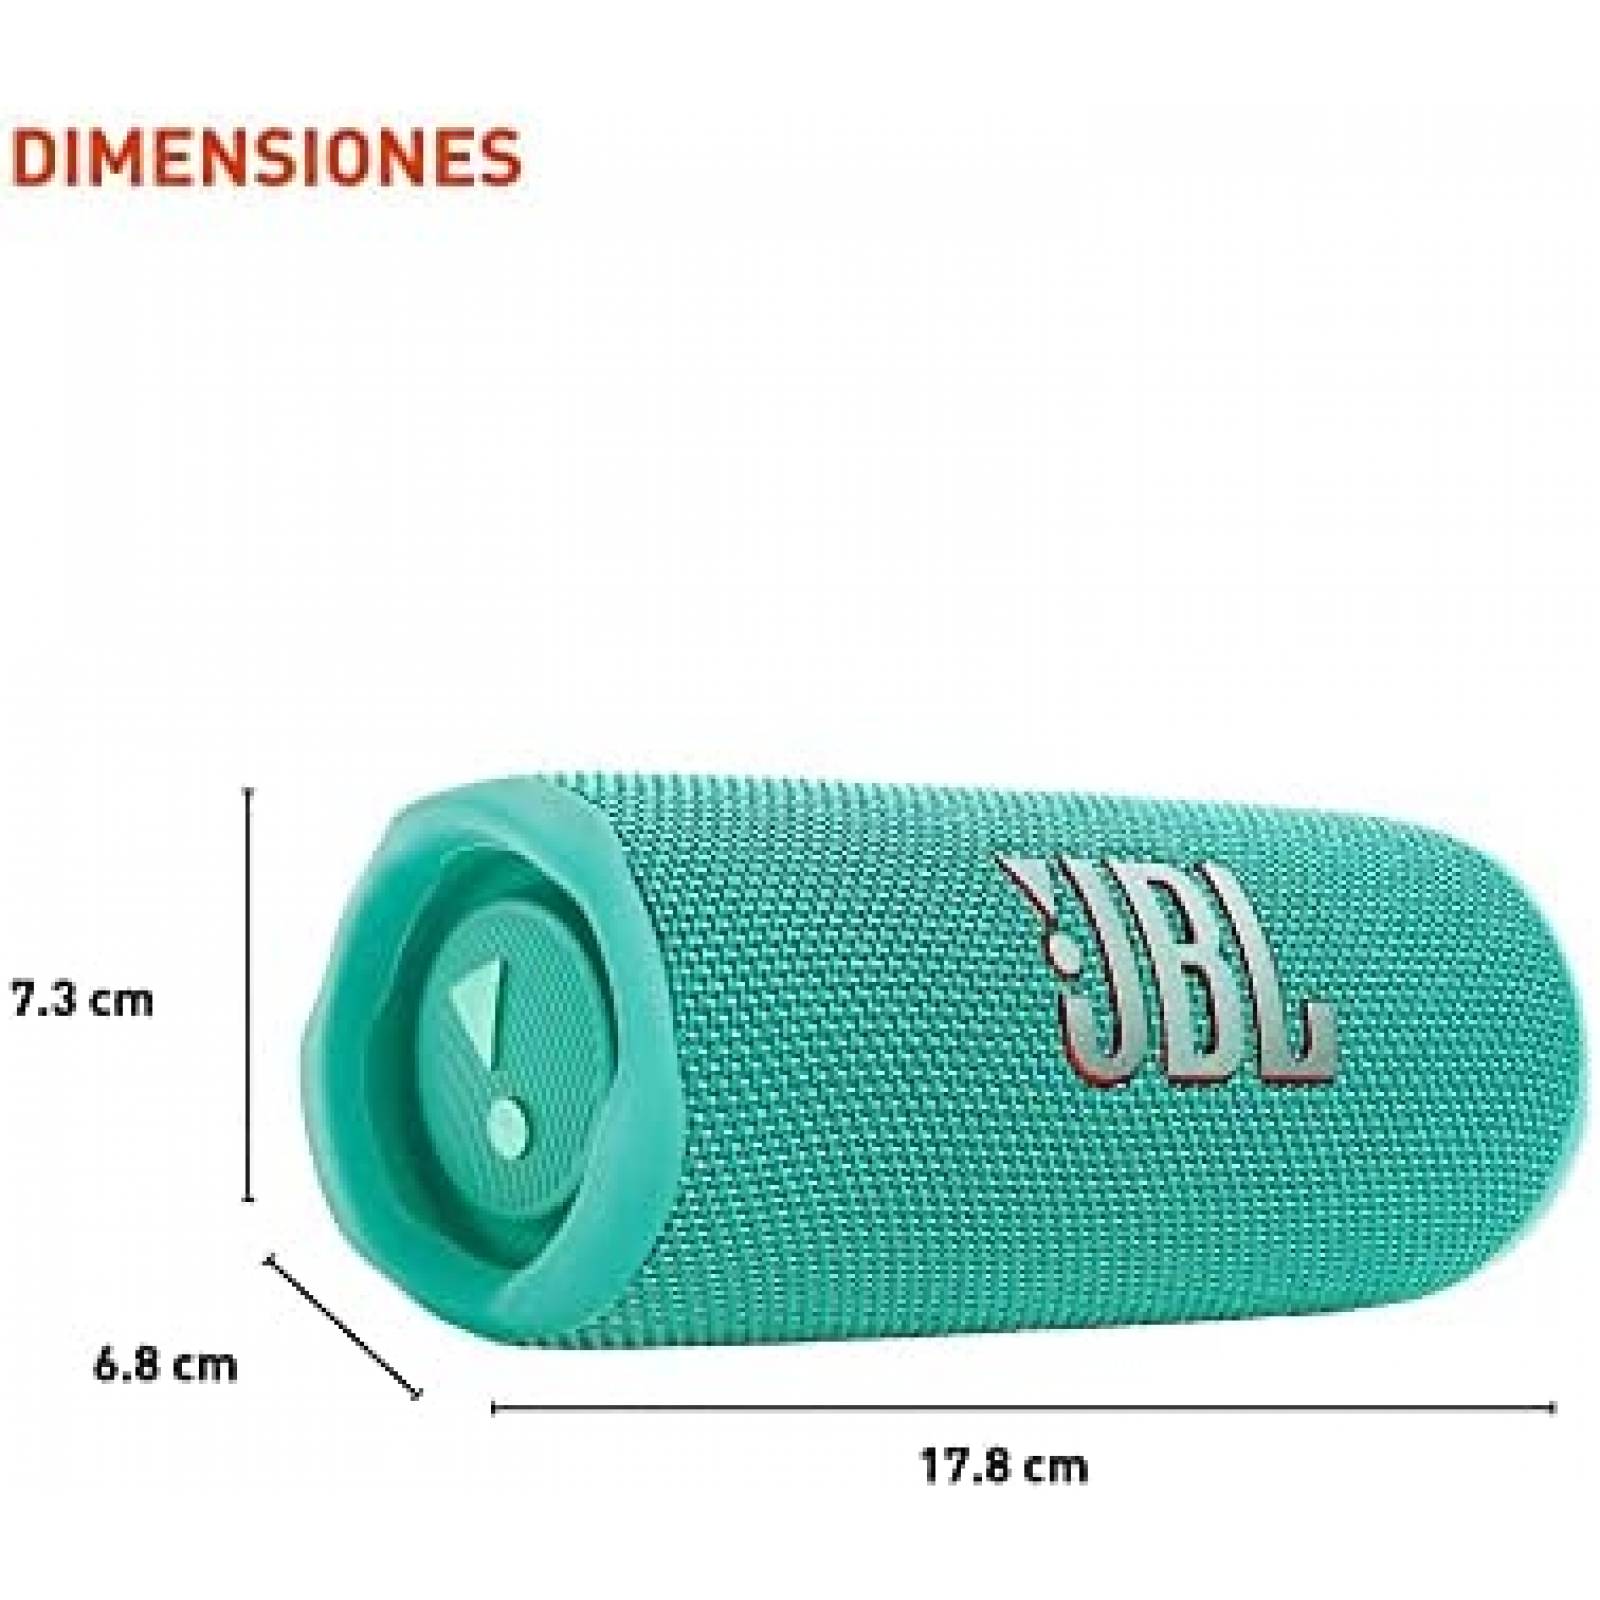 Altavoz inalámbrico  JBL Flip 6, Bluetooth, Hasta 12 h, IPX67, Azul